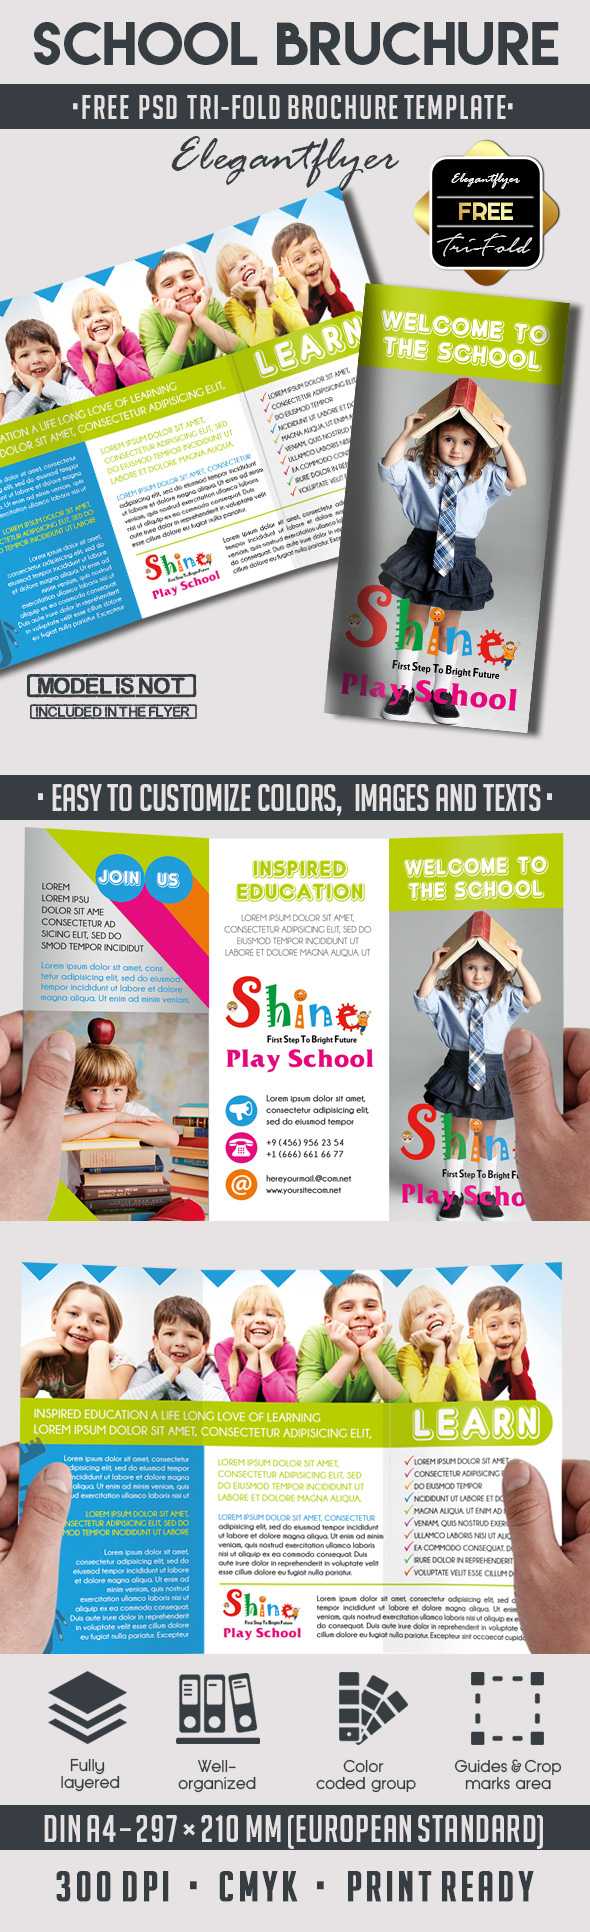 School – Free Psd Tri Fold Psd Brochure Template On Behance With Regard To Play School Brochure Templates